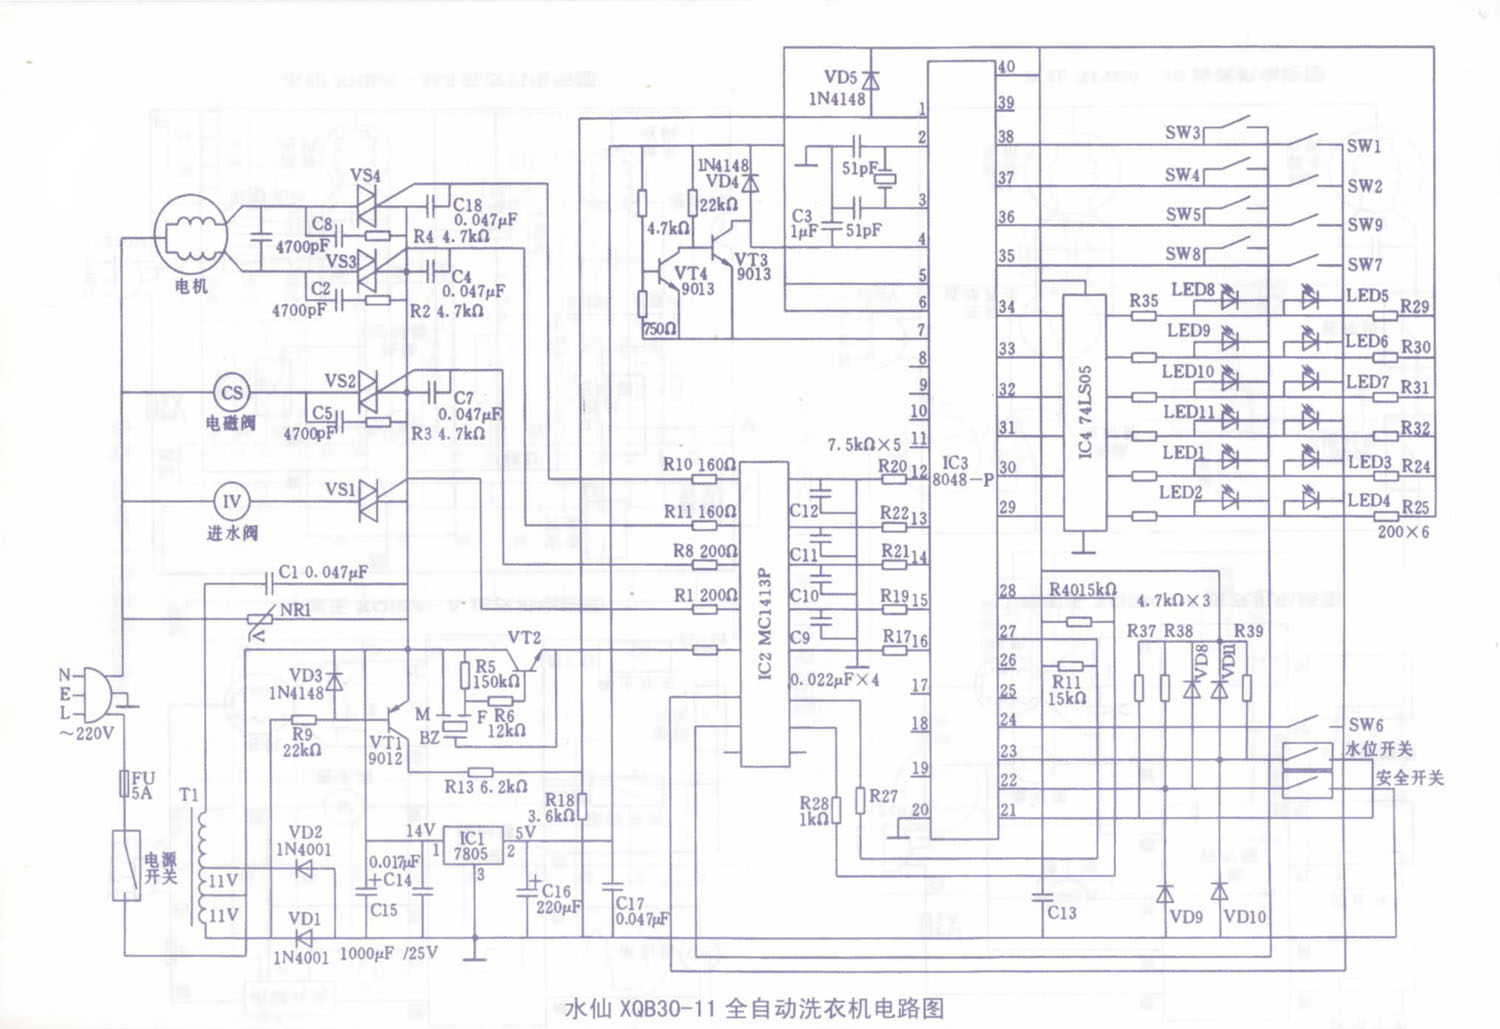 Narcissus XQB30-11 automatic washing machine circuit diagram